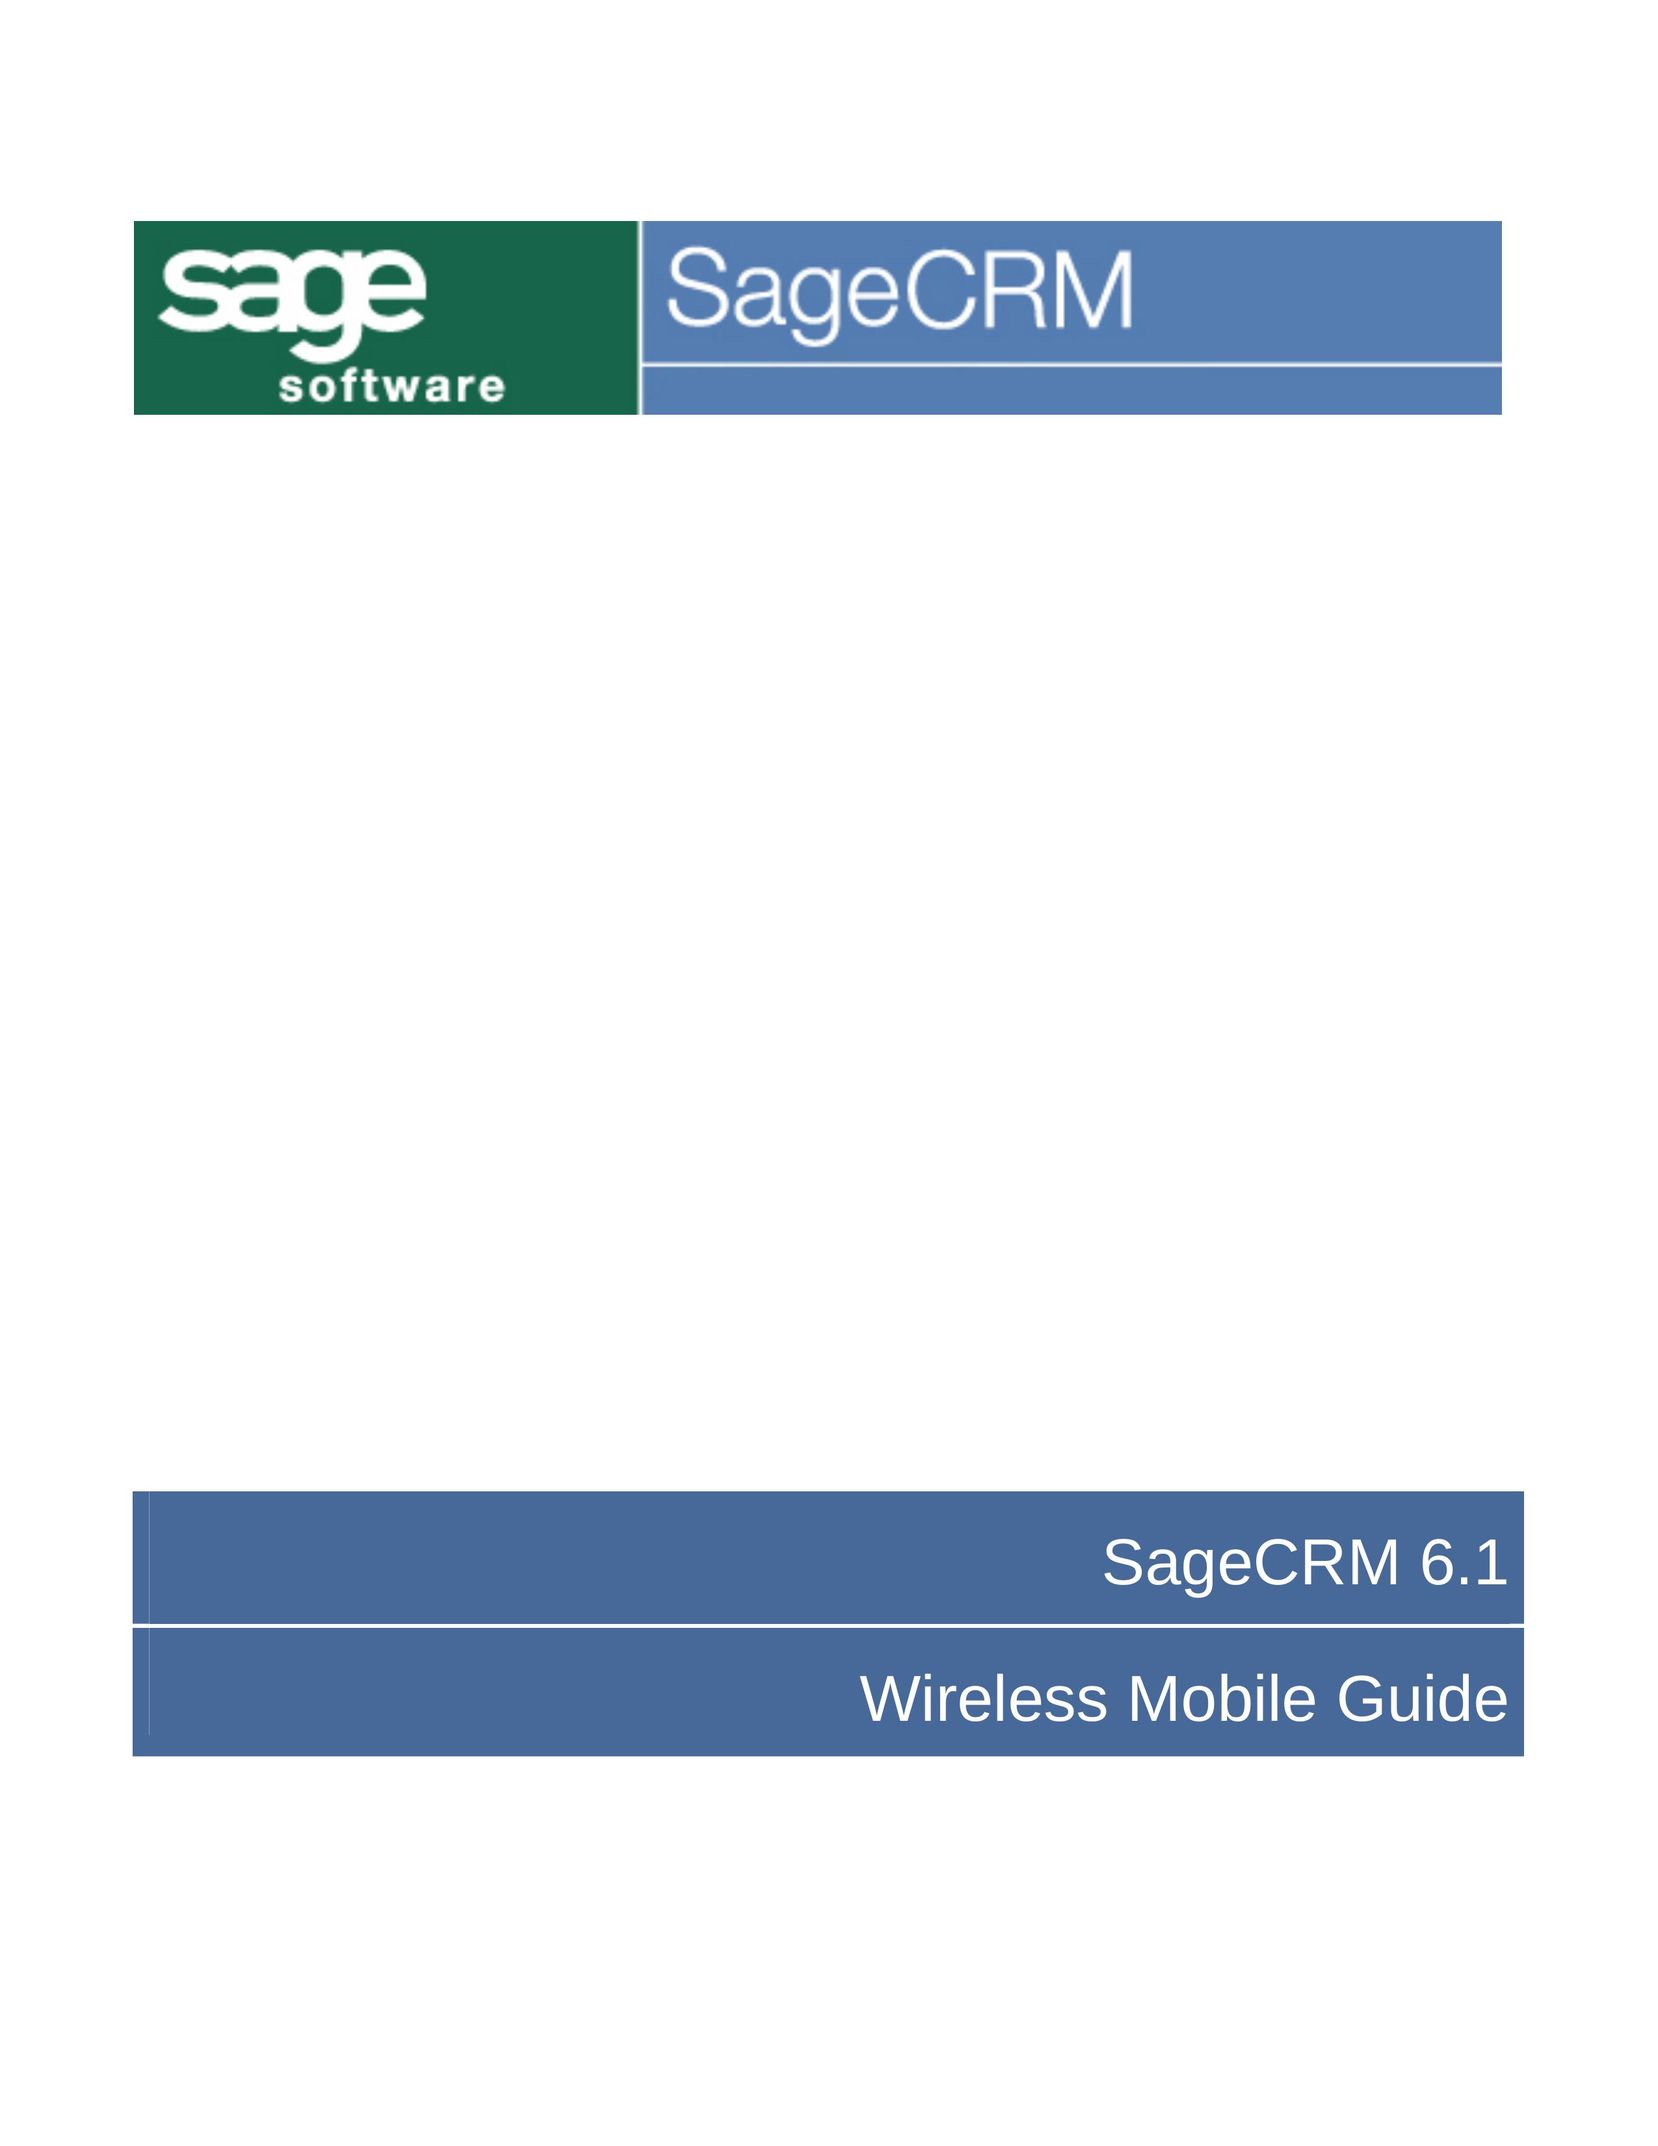 Sage Software SageCRM 6.1 Cell Phone User Manual